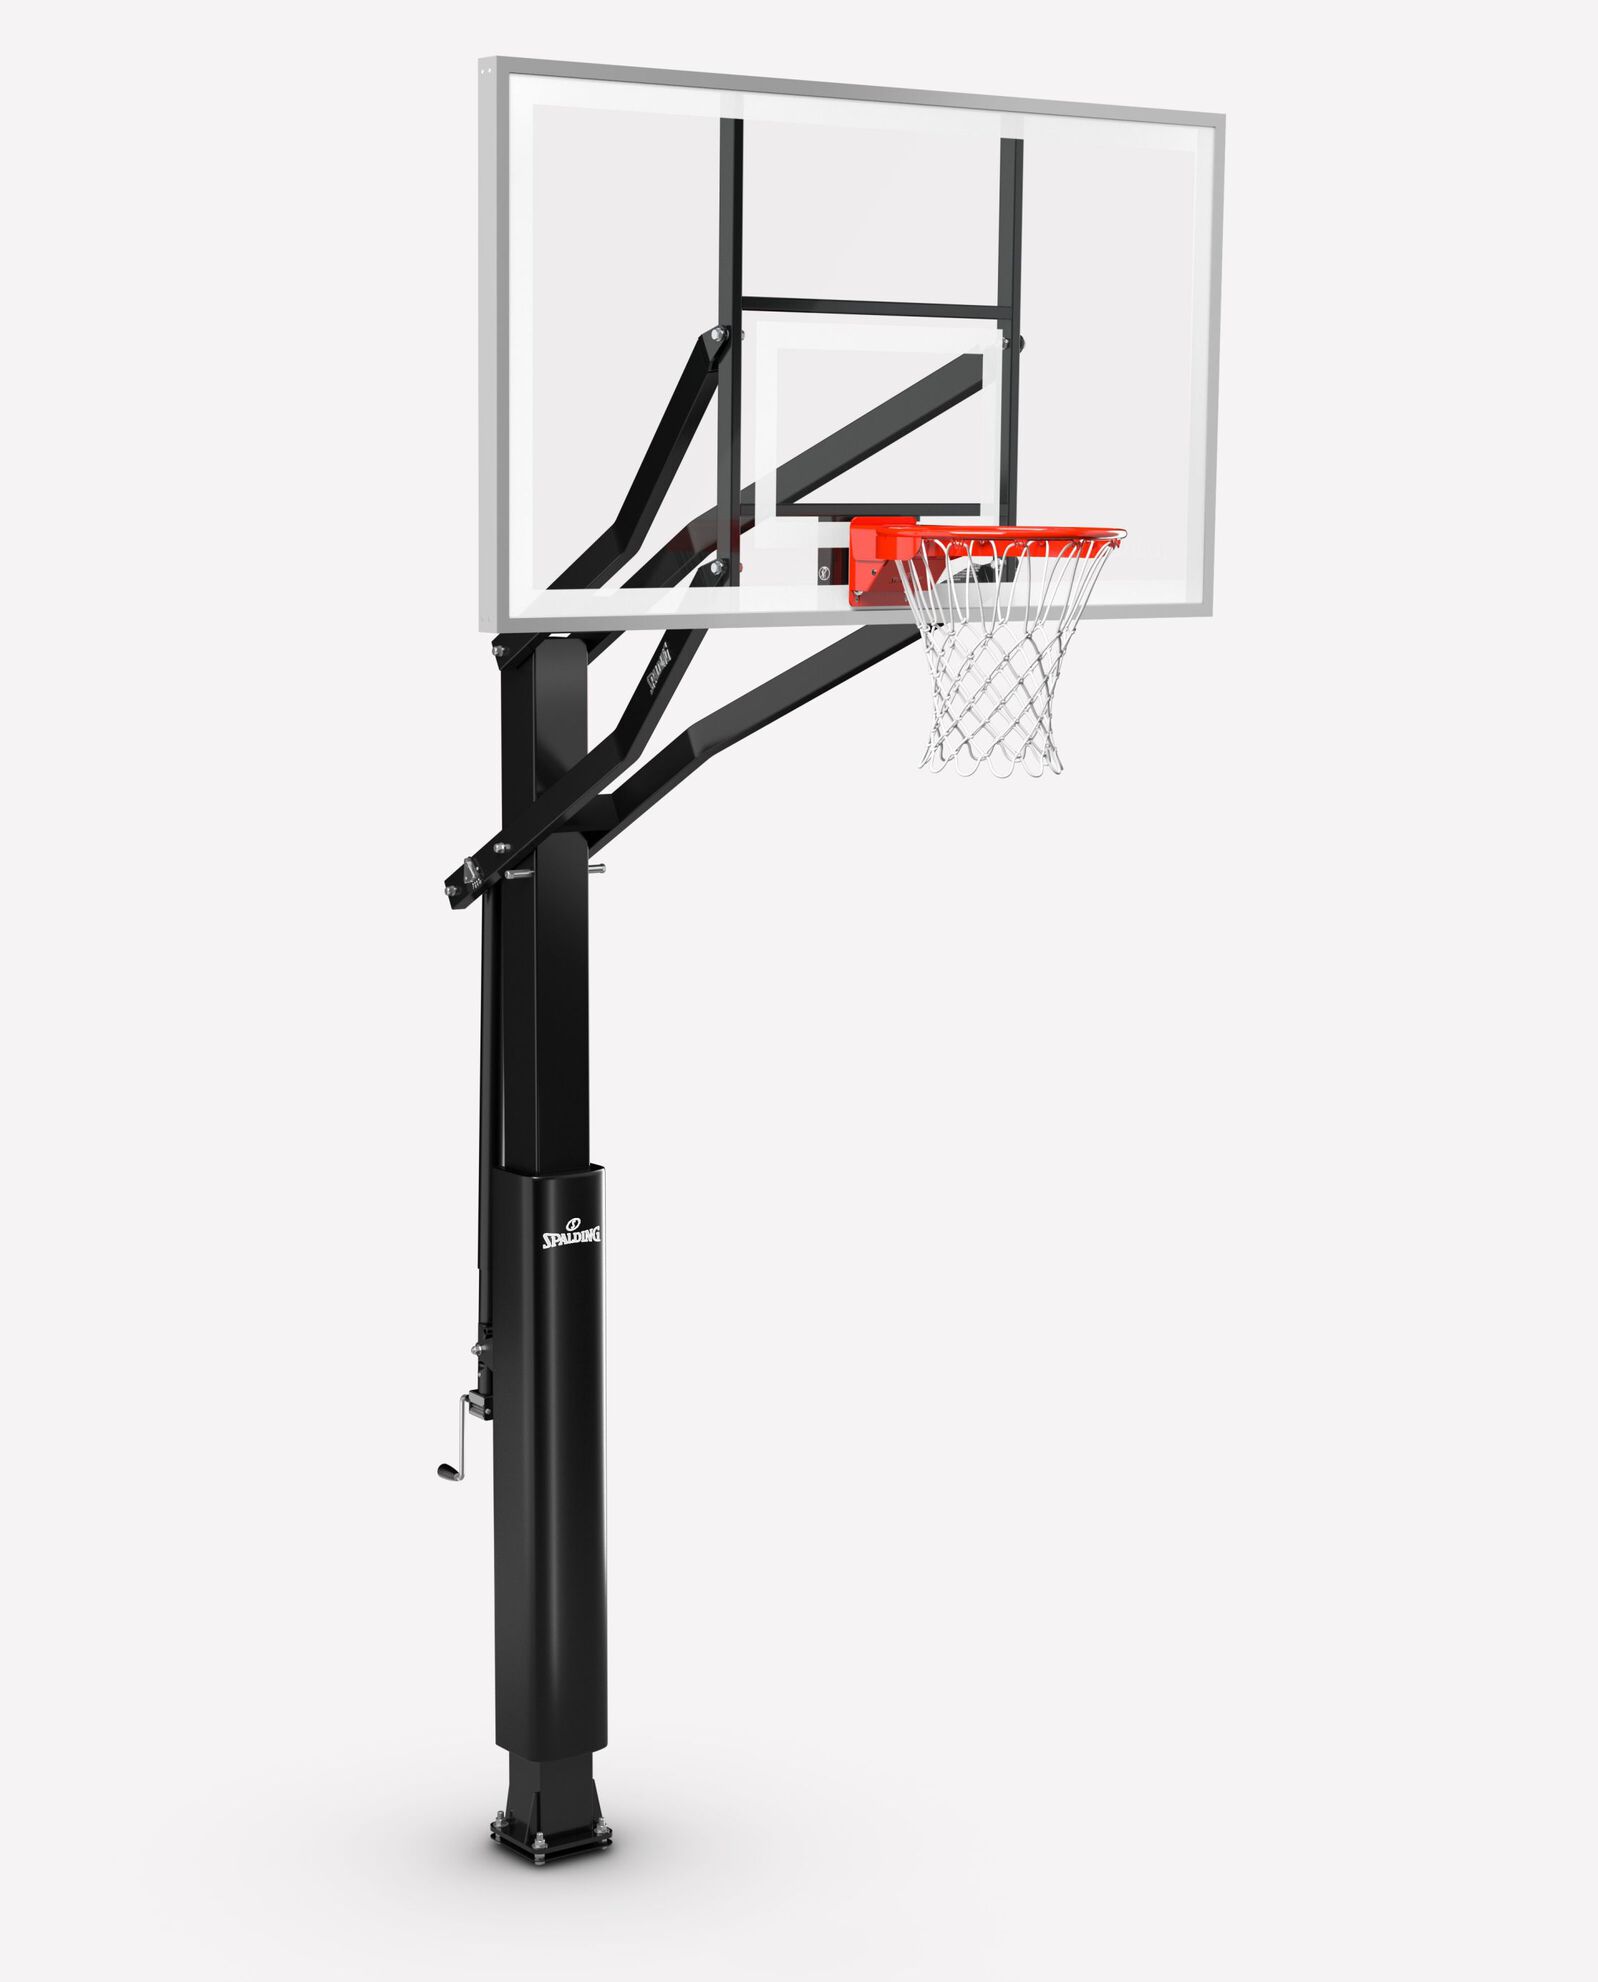 Basketball Backboard System, Basketball Hoops & Nets